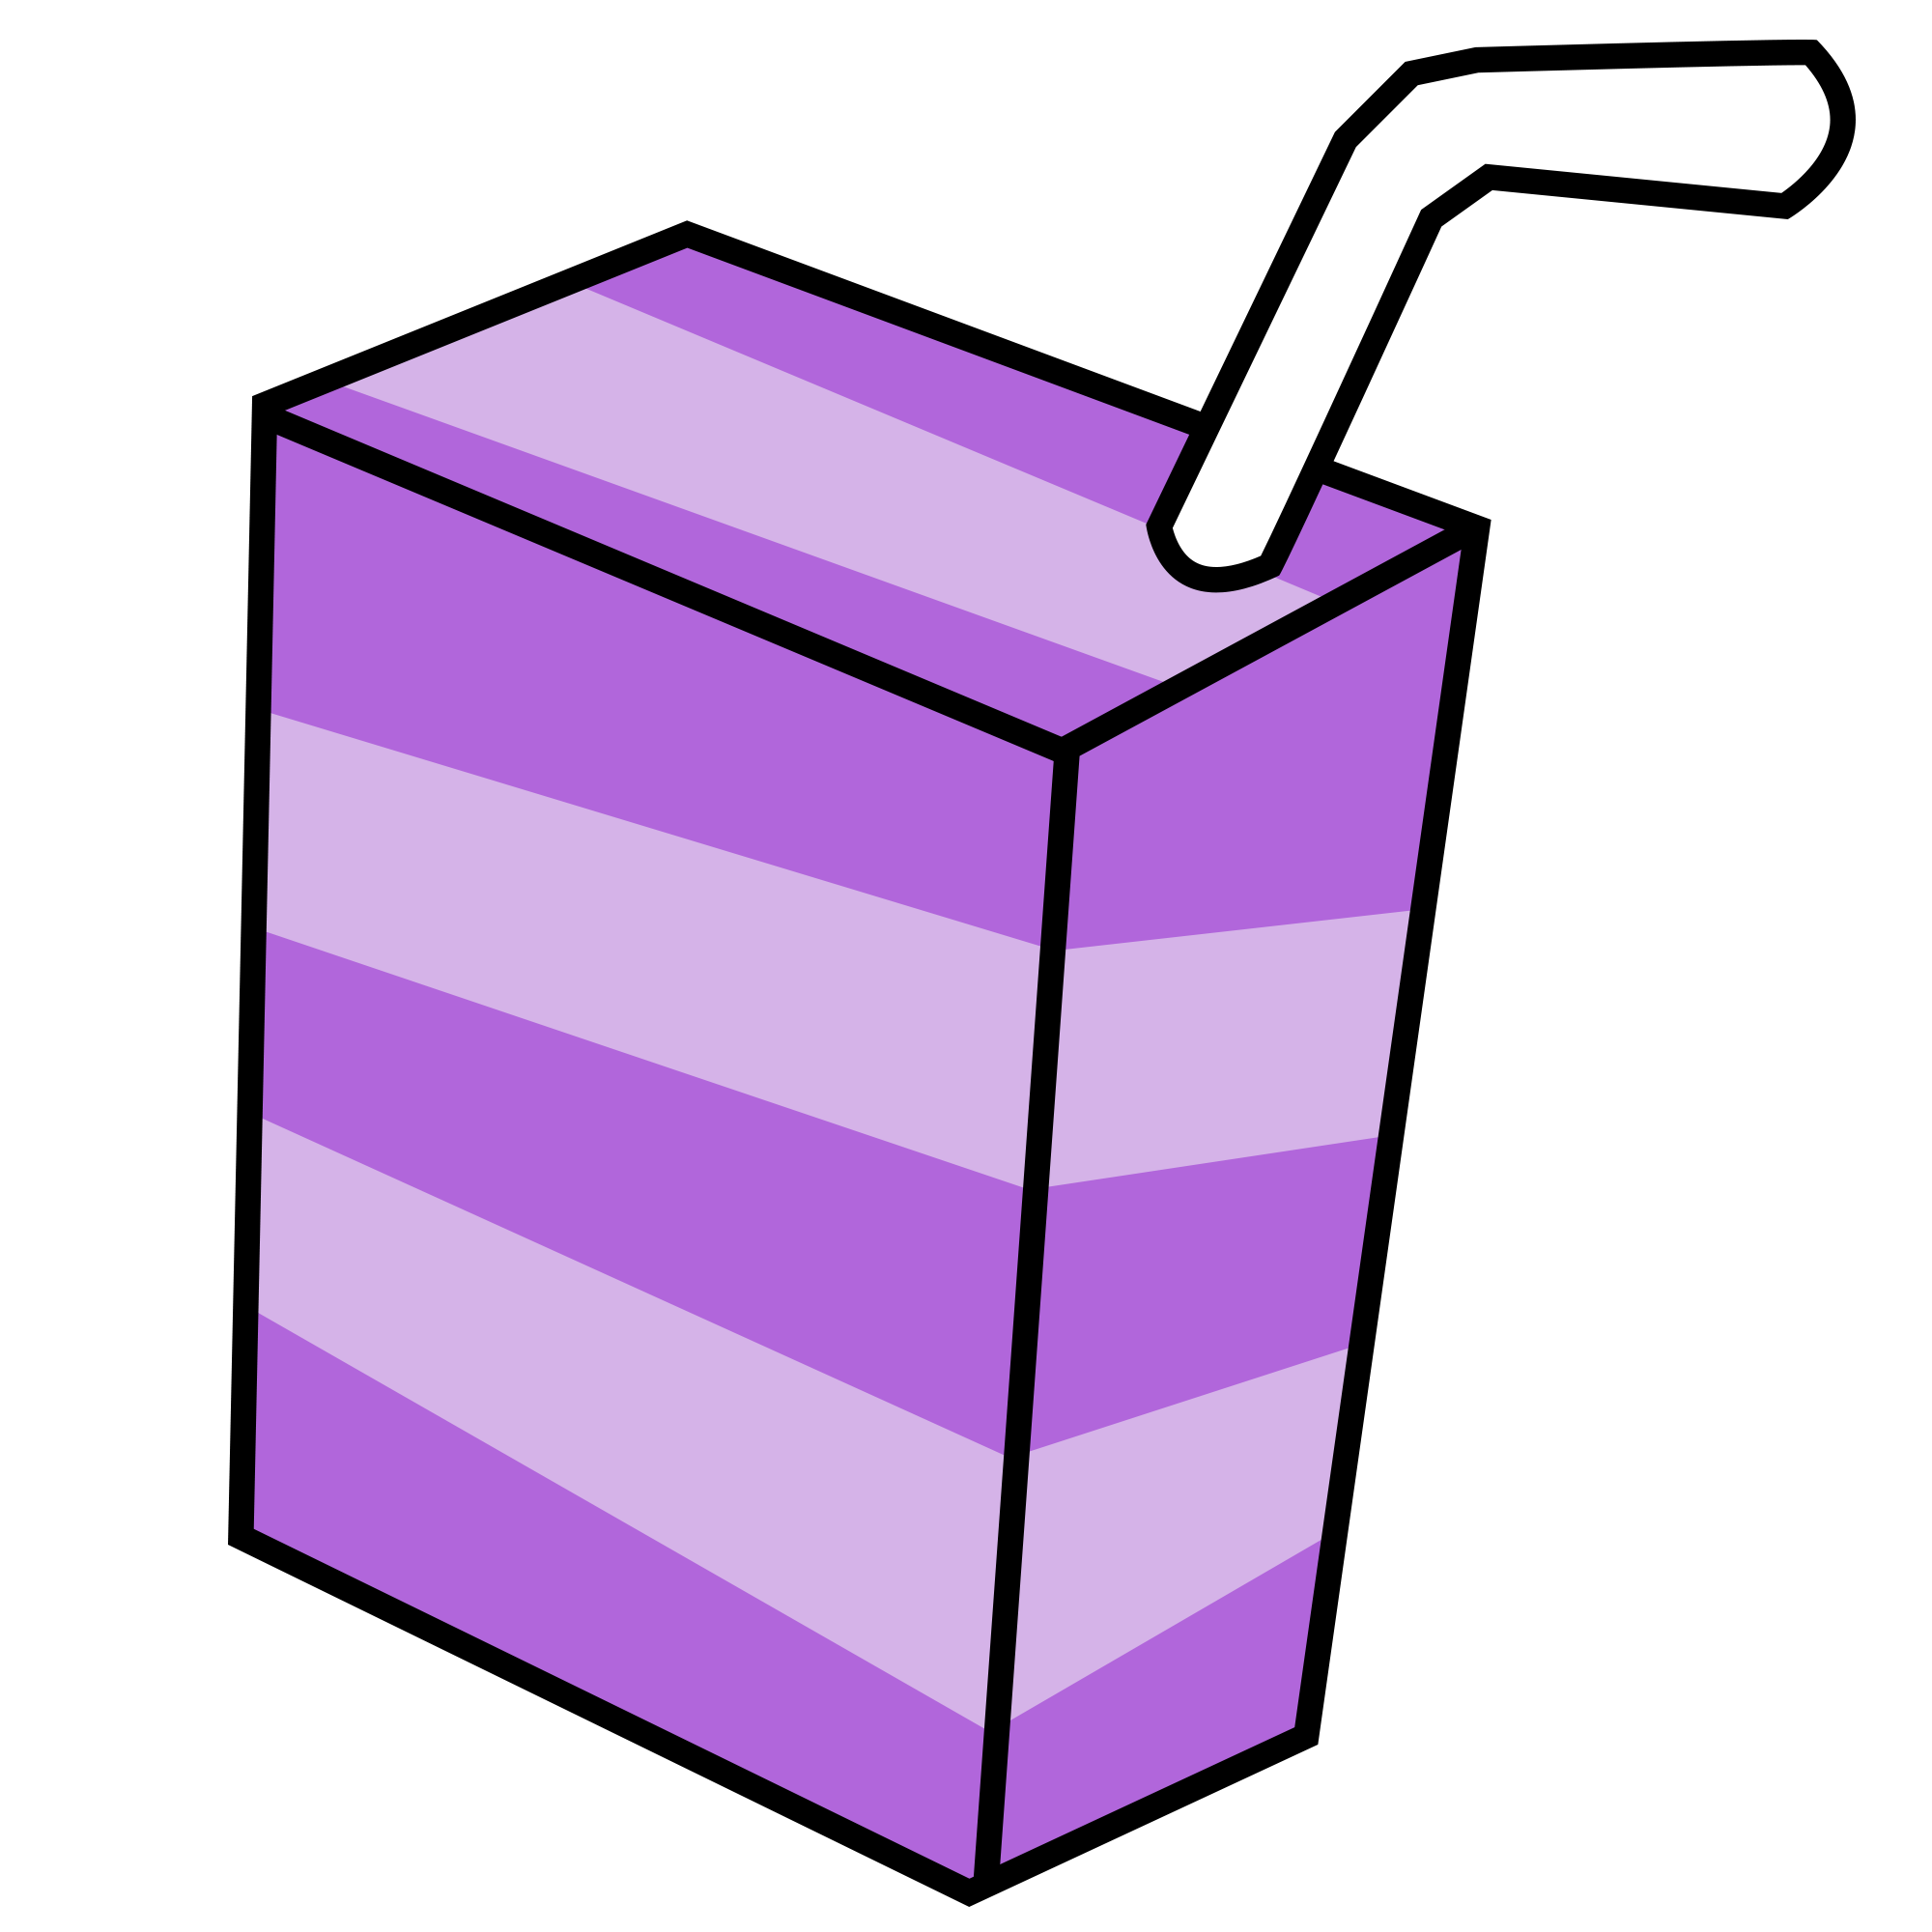 juice box clipart